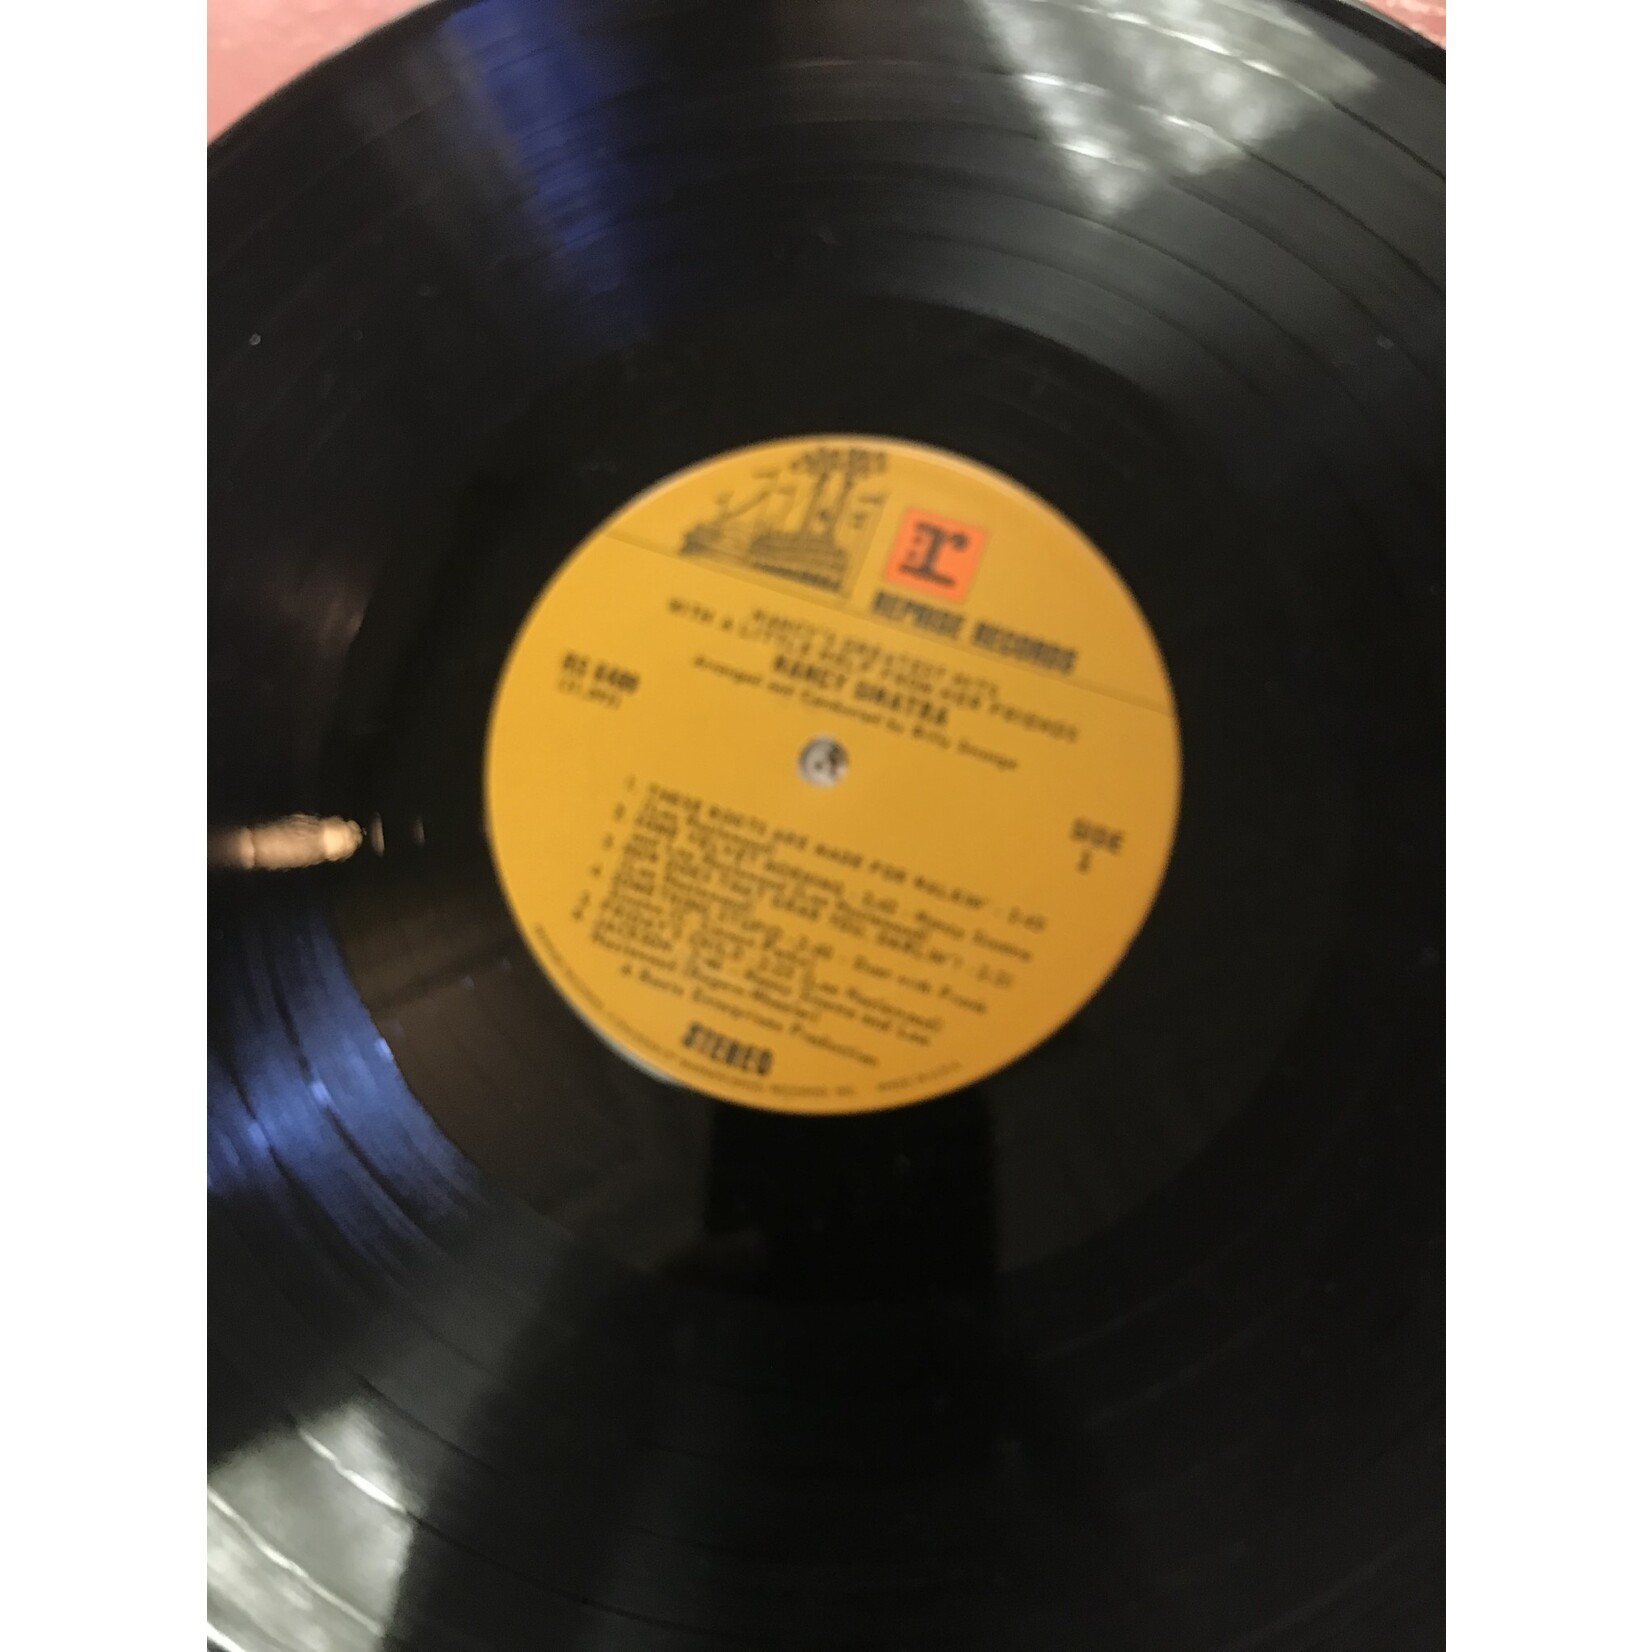 Nancy Sinatra - Greatest Hits - RS6409 - Vinyl LP (USED)